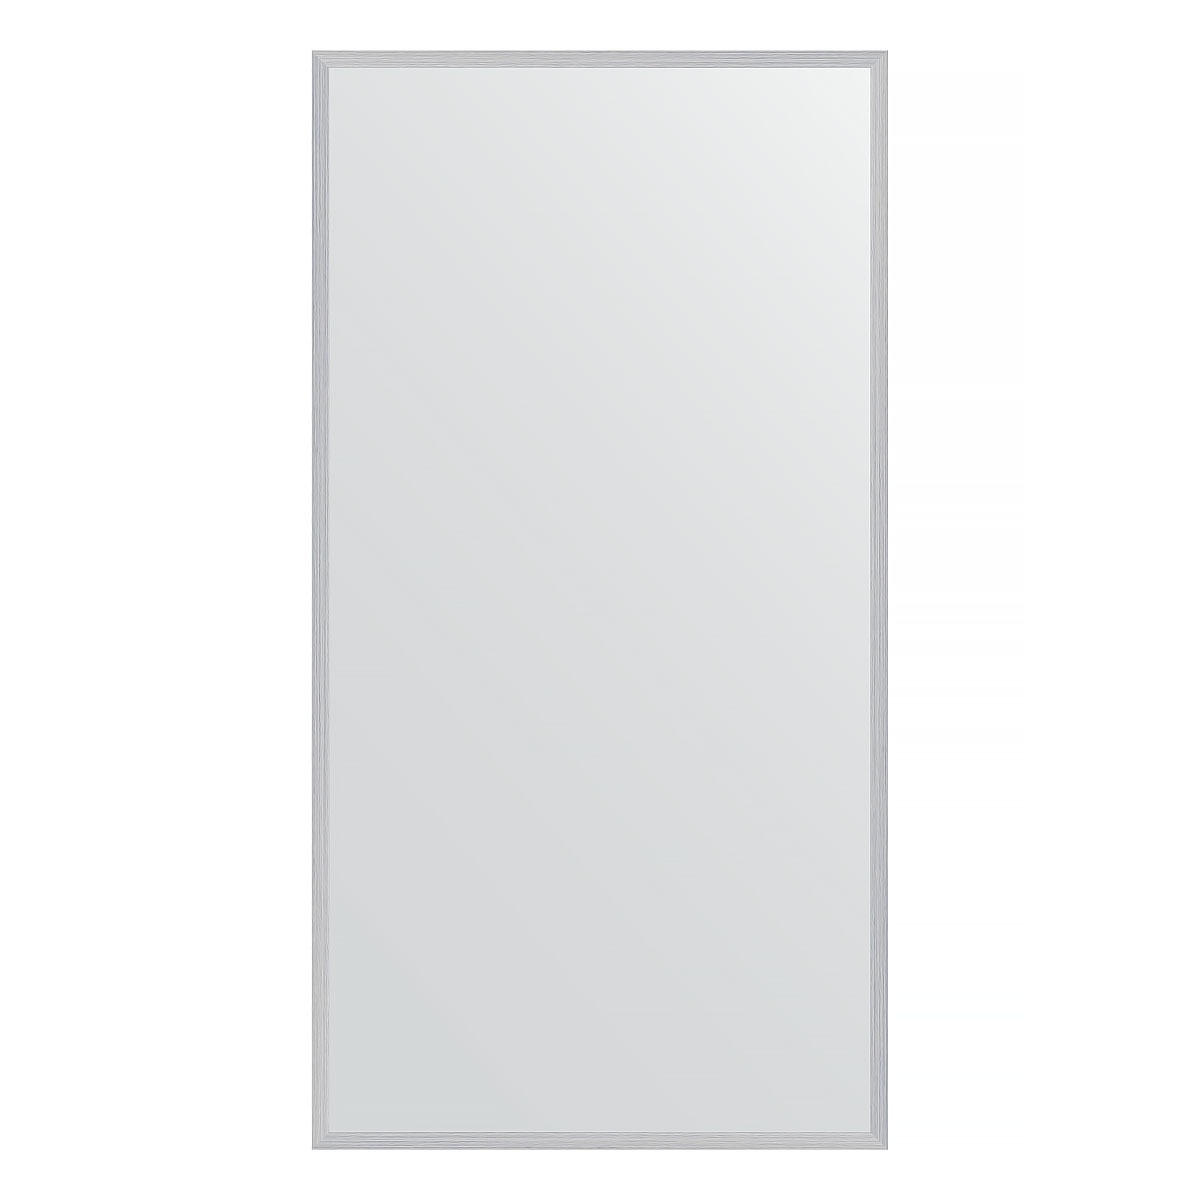 Зеркало в багетной раме Evoform сталь 20 мм 66х126 см зеркало с фацетом в багетной раме evoform орех 65 мм 72х102 см